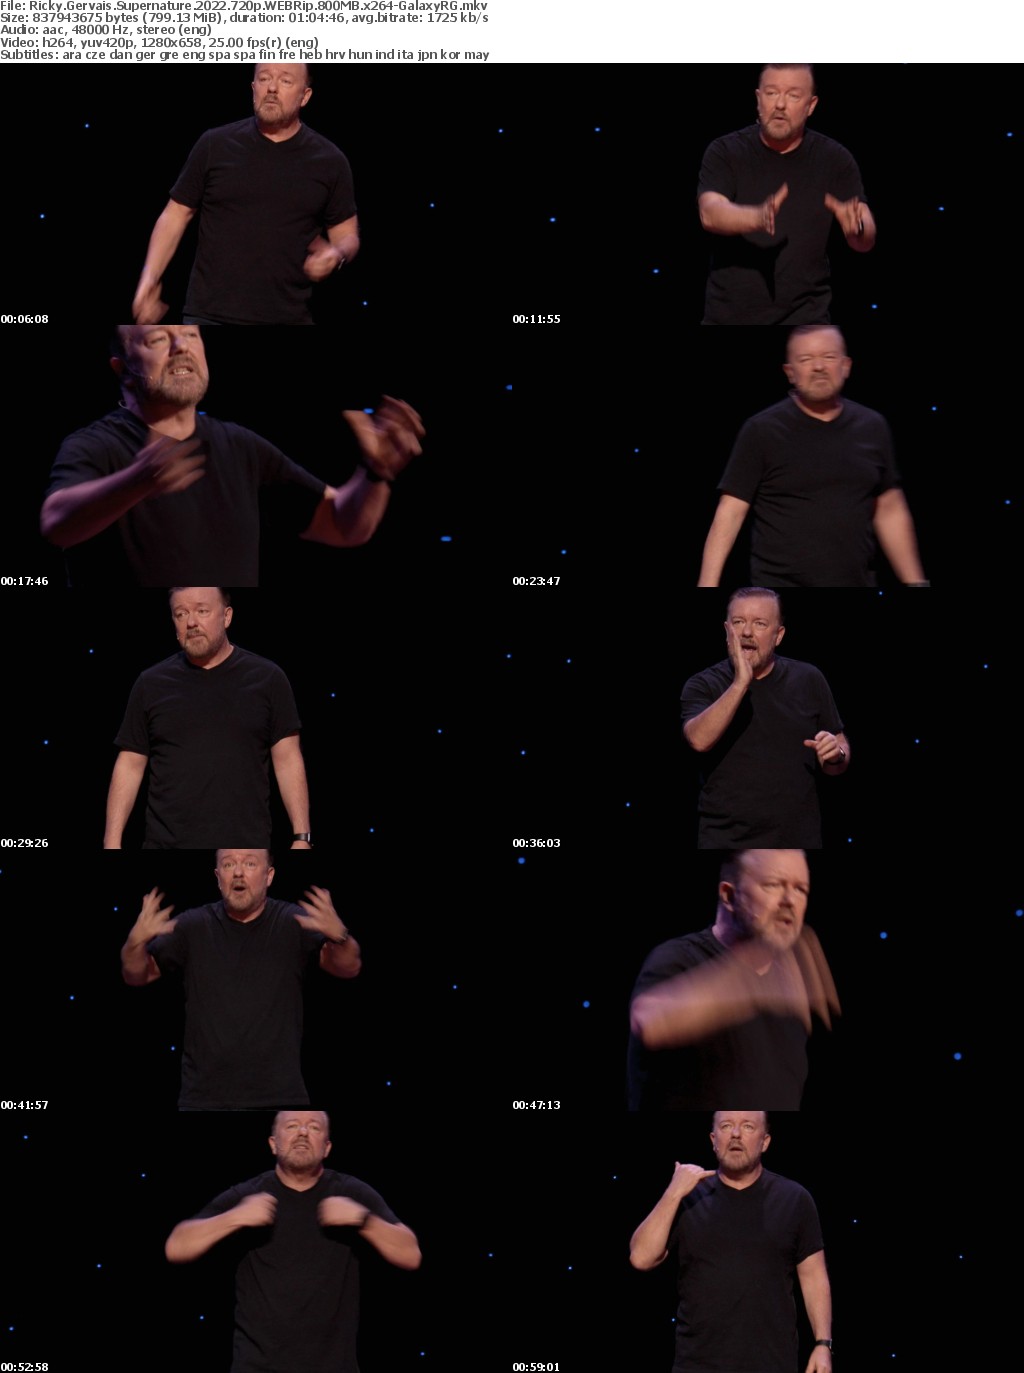 Ricky Gervais Supernature 2022 720p WEBRip 800MB x264-GalaxyRG